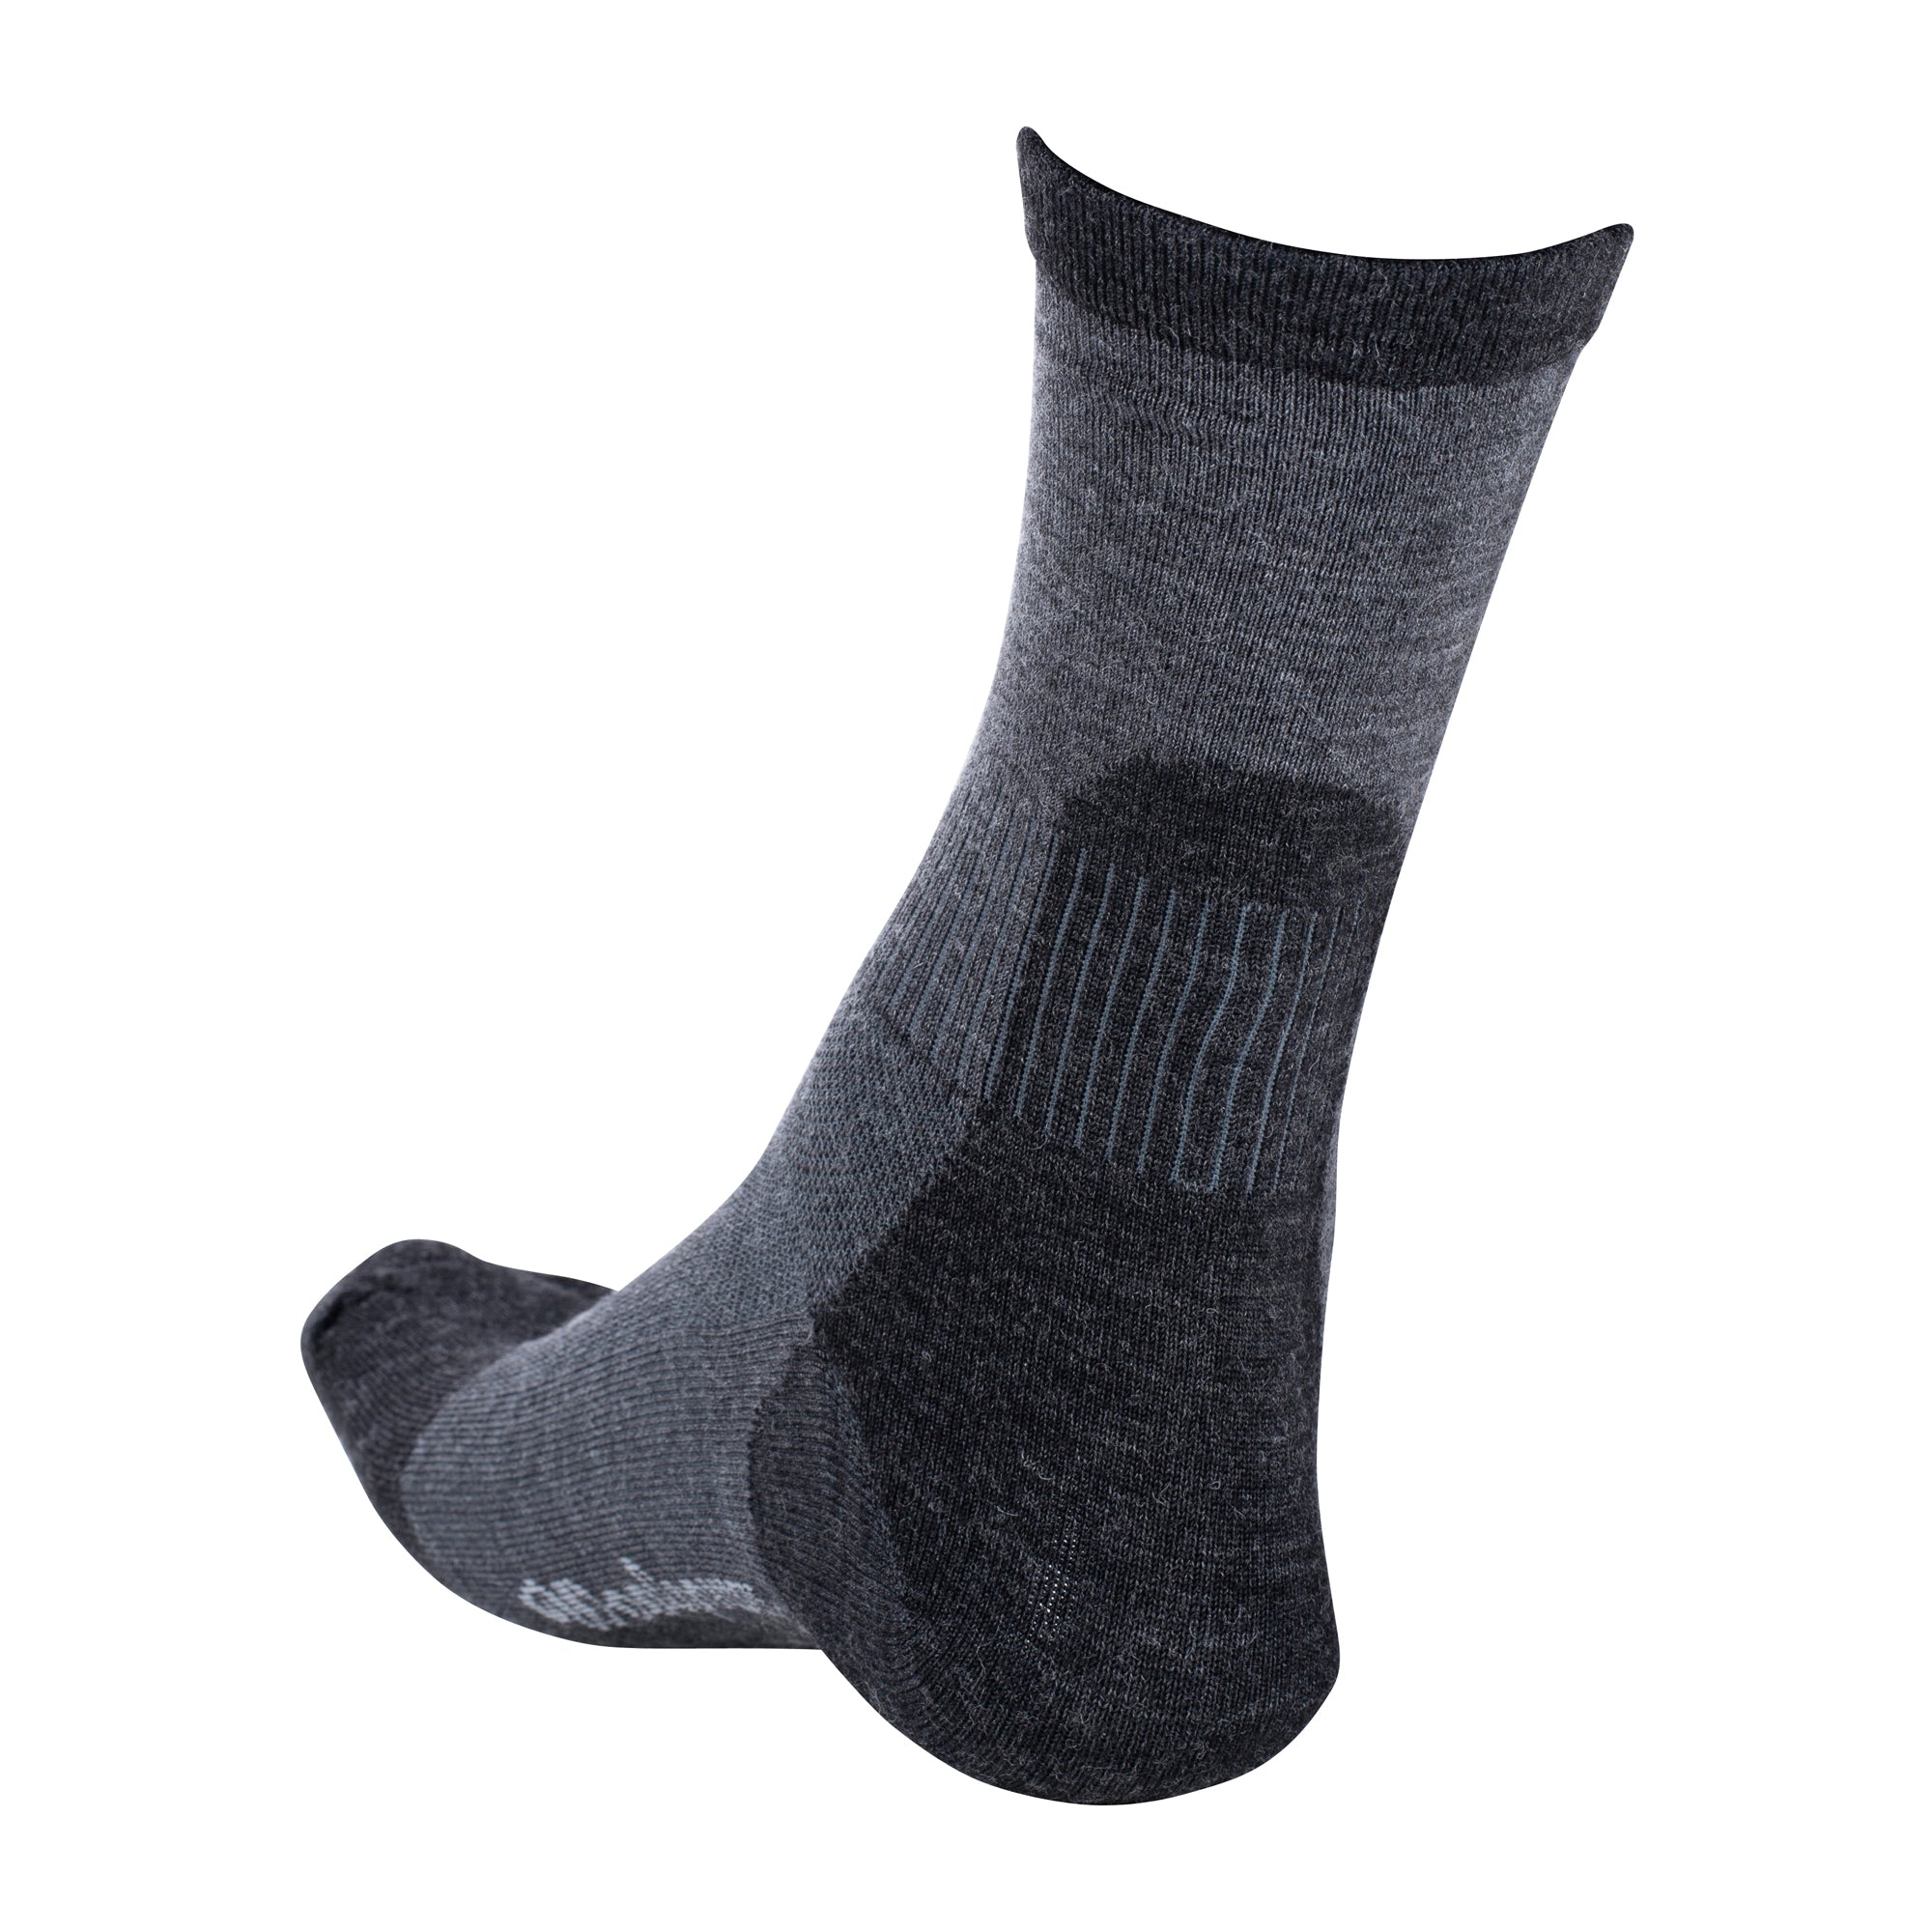 Woolpower Socken Skilled Liner Classic dunkelgrau schwarz